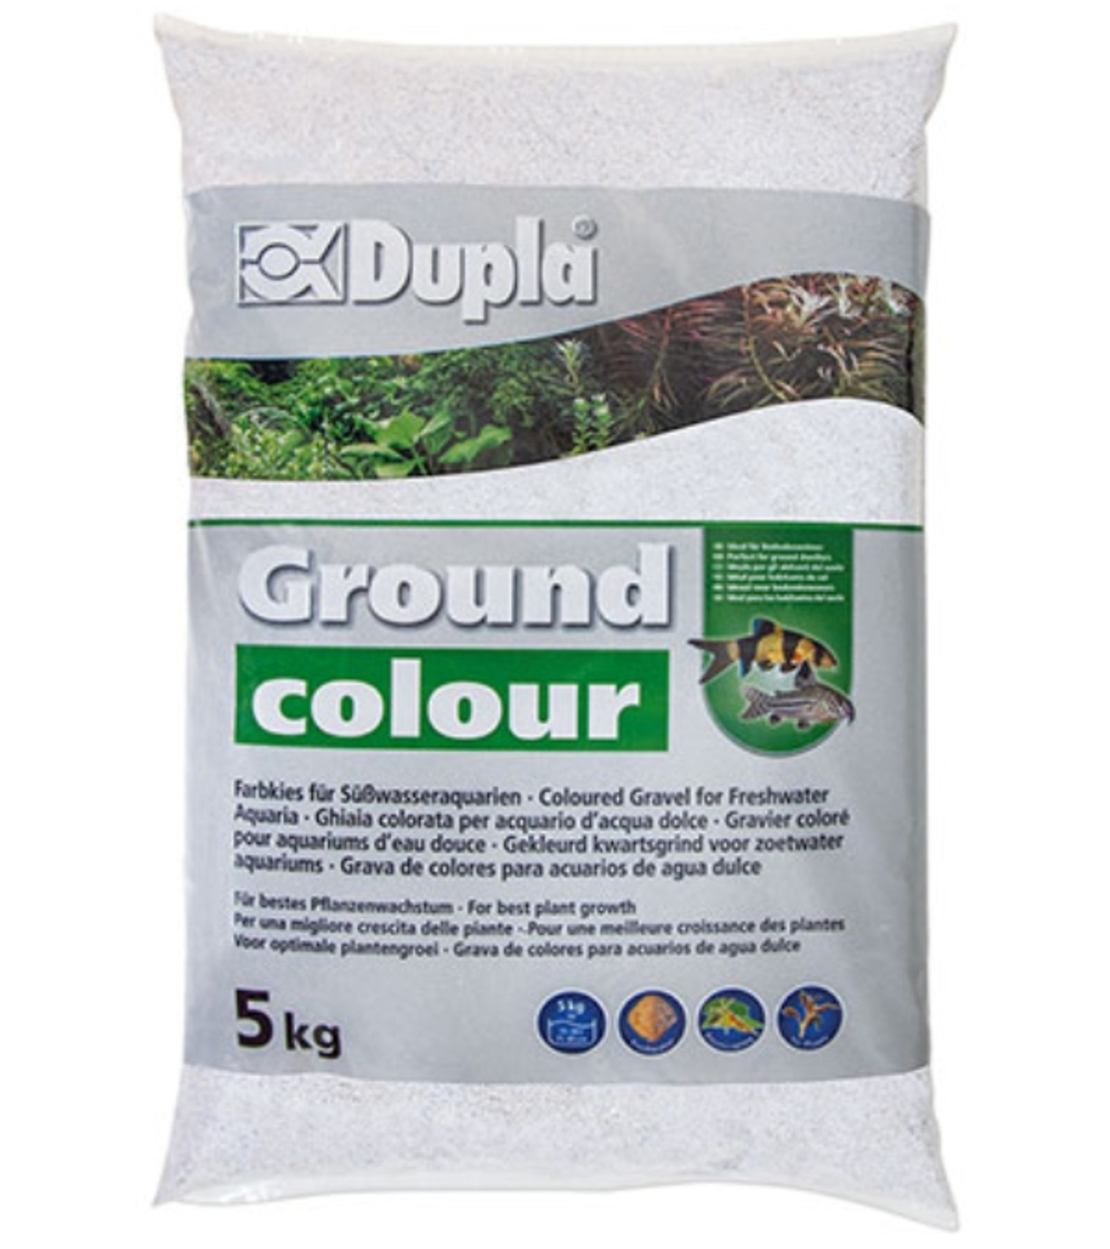 Dupla Ground colour Snow White 5kg | חצץ בצבע לבן אפרפר